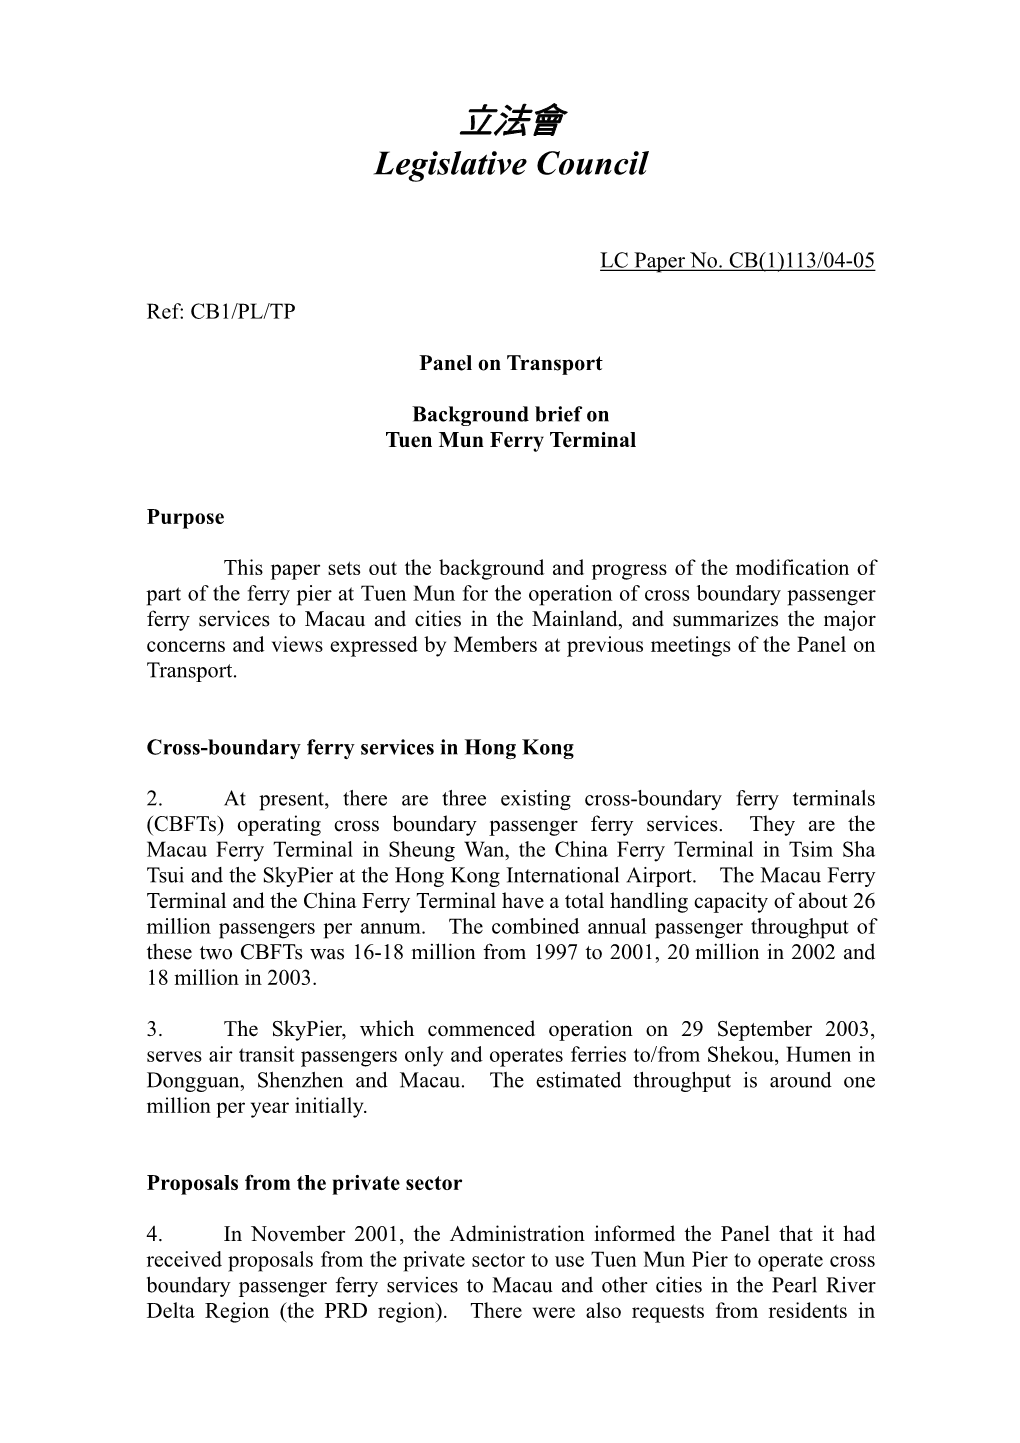 Background Brief on Tuen Mun Ferry Terminal Prepared by The